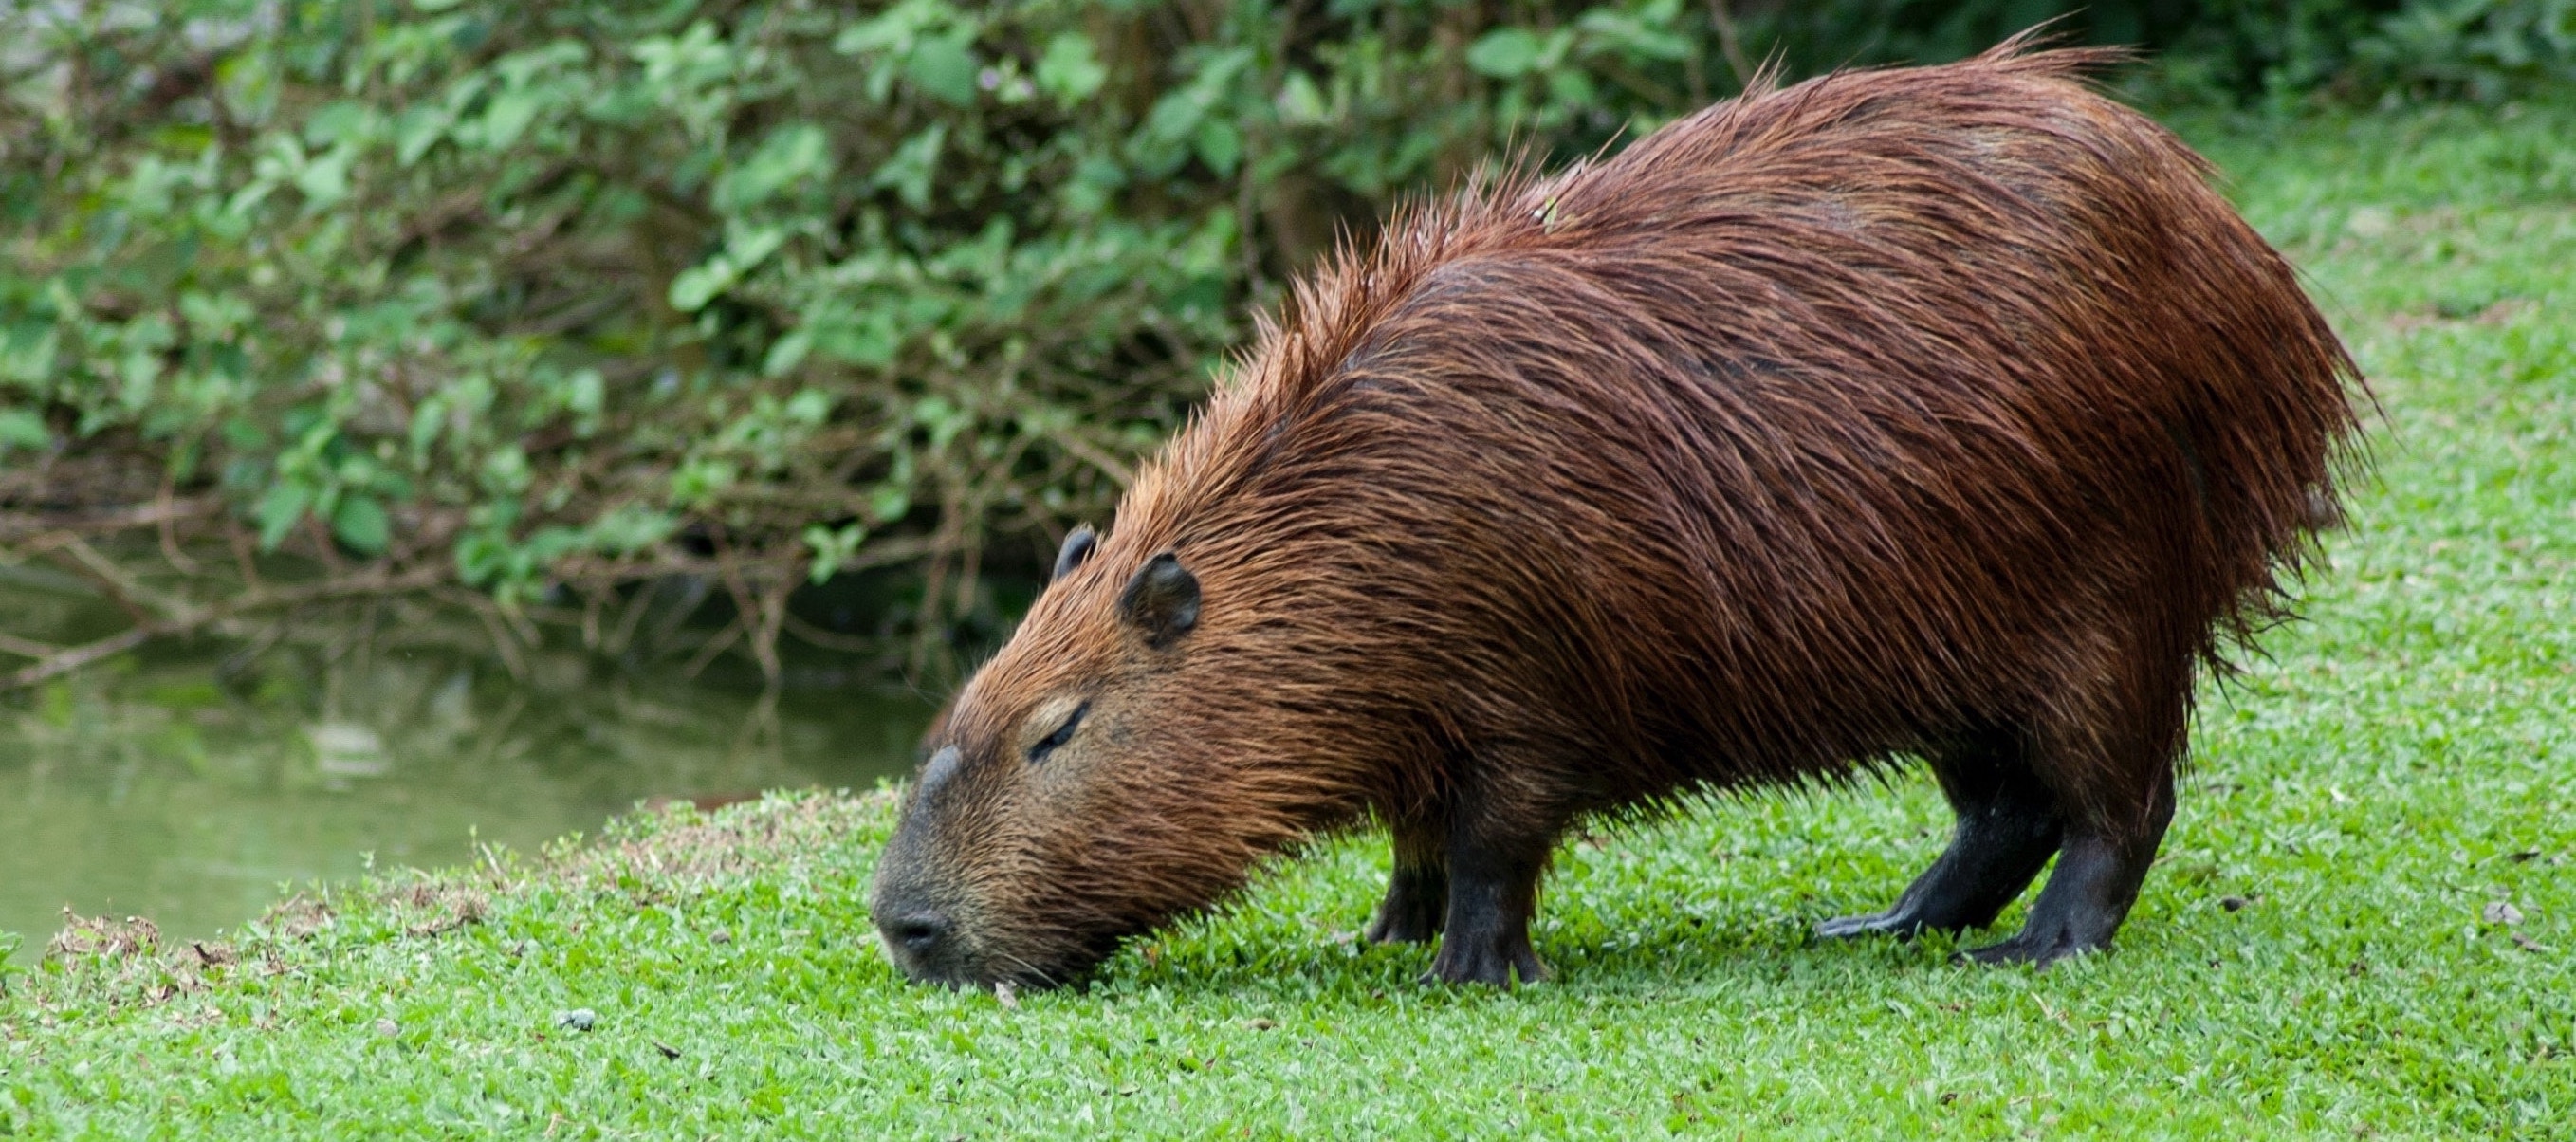 capybara eatting